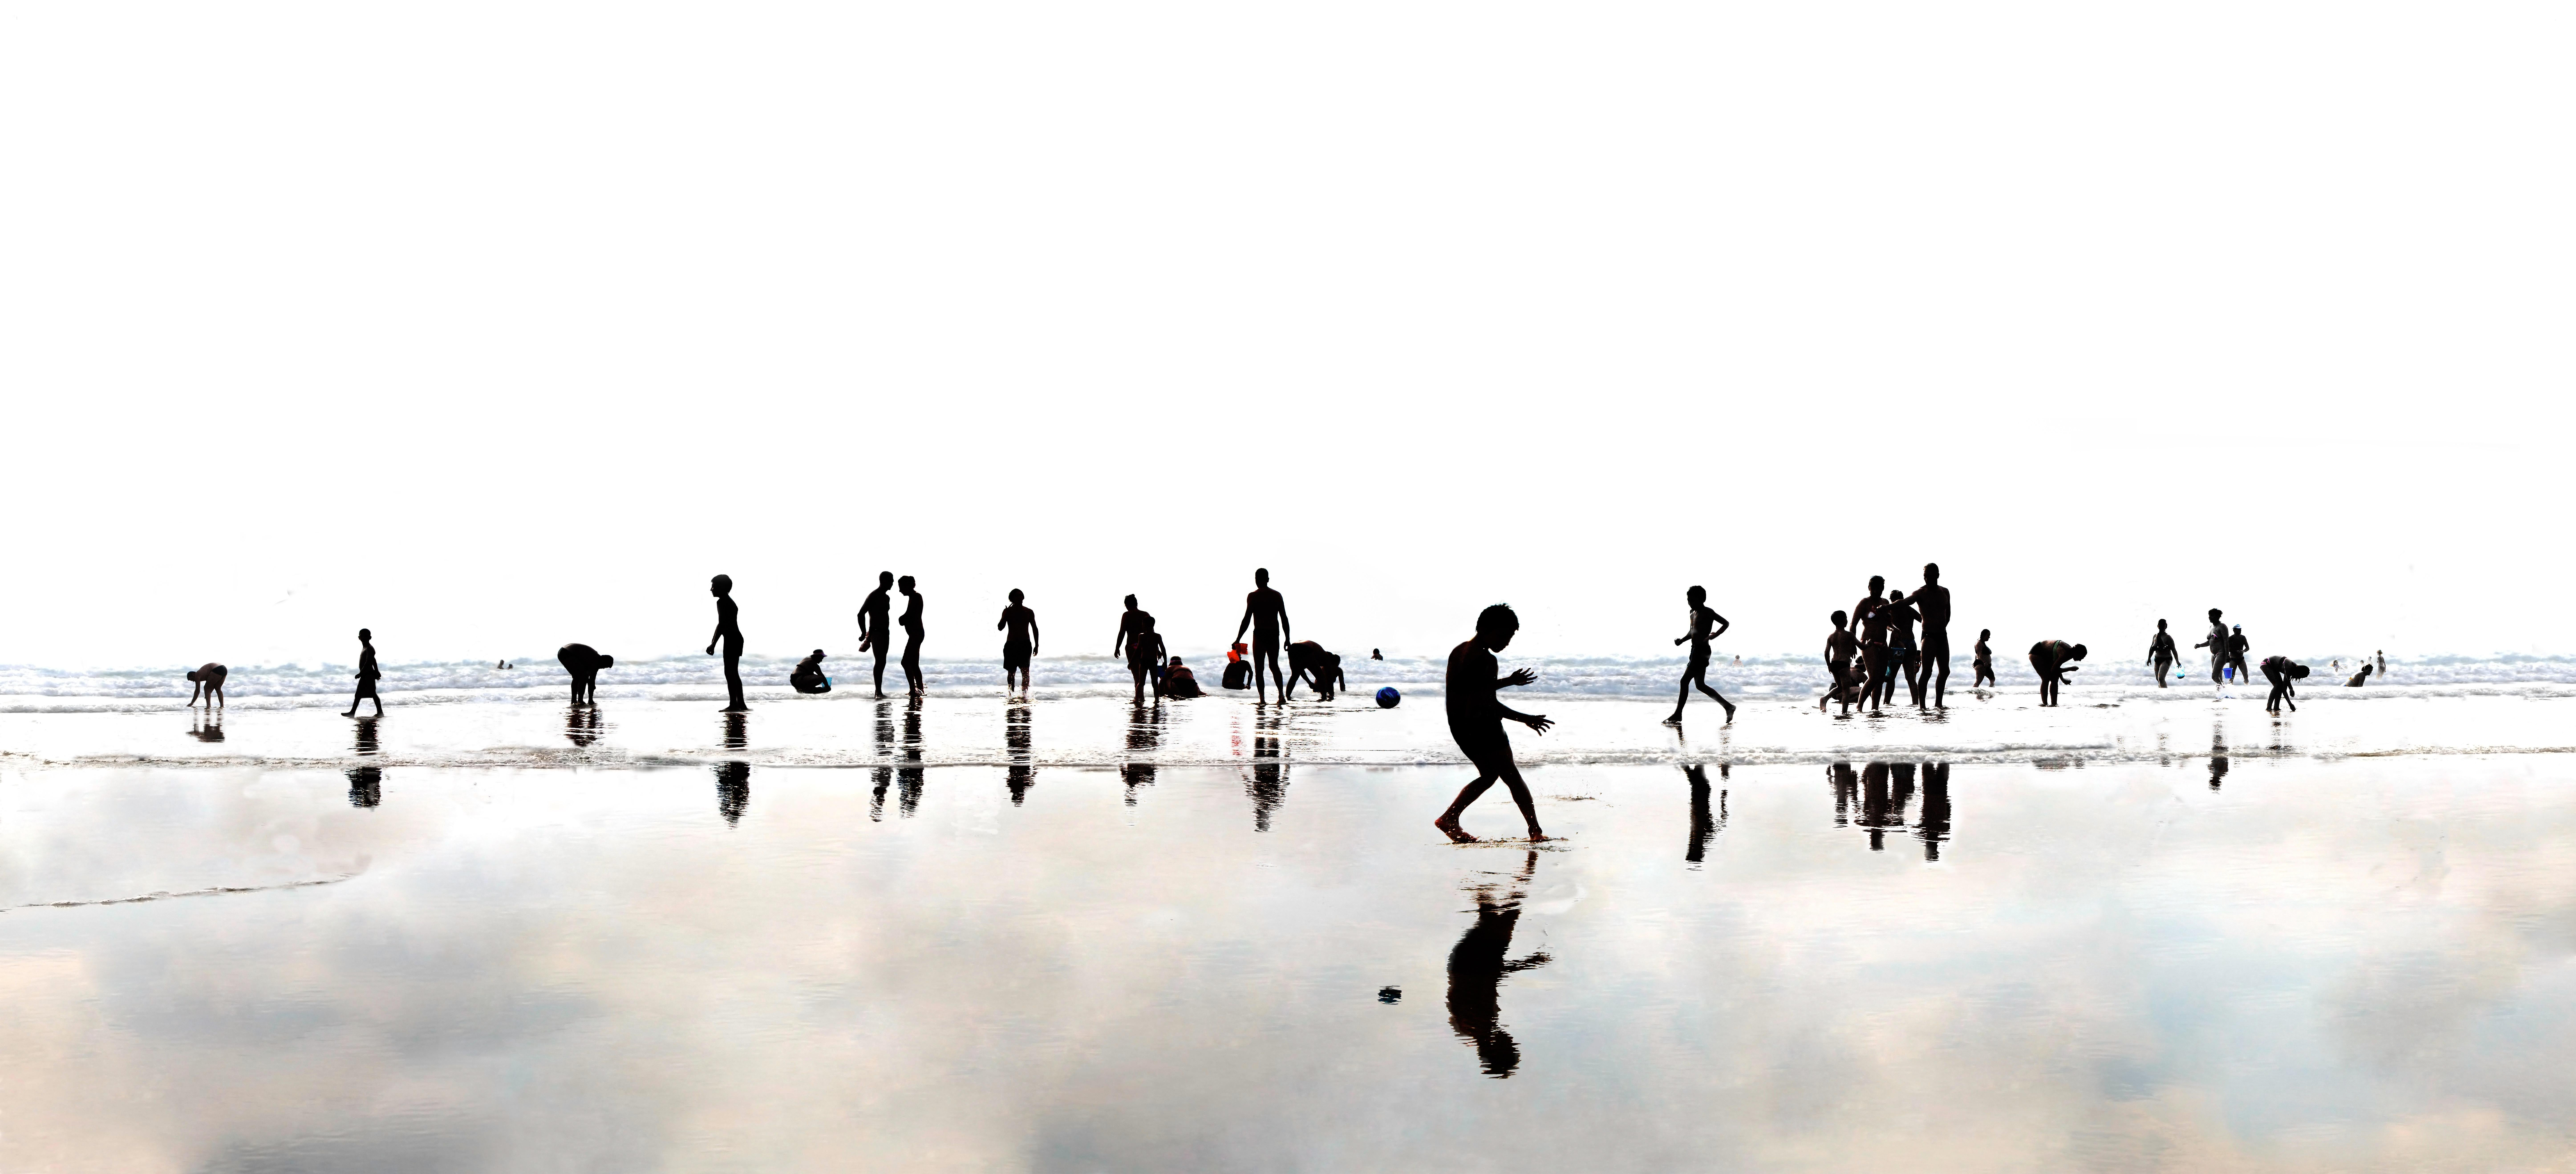 Plage 99 - 21st Century, Contemporary, Beach Landscape Photography